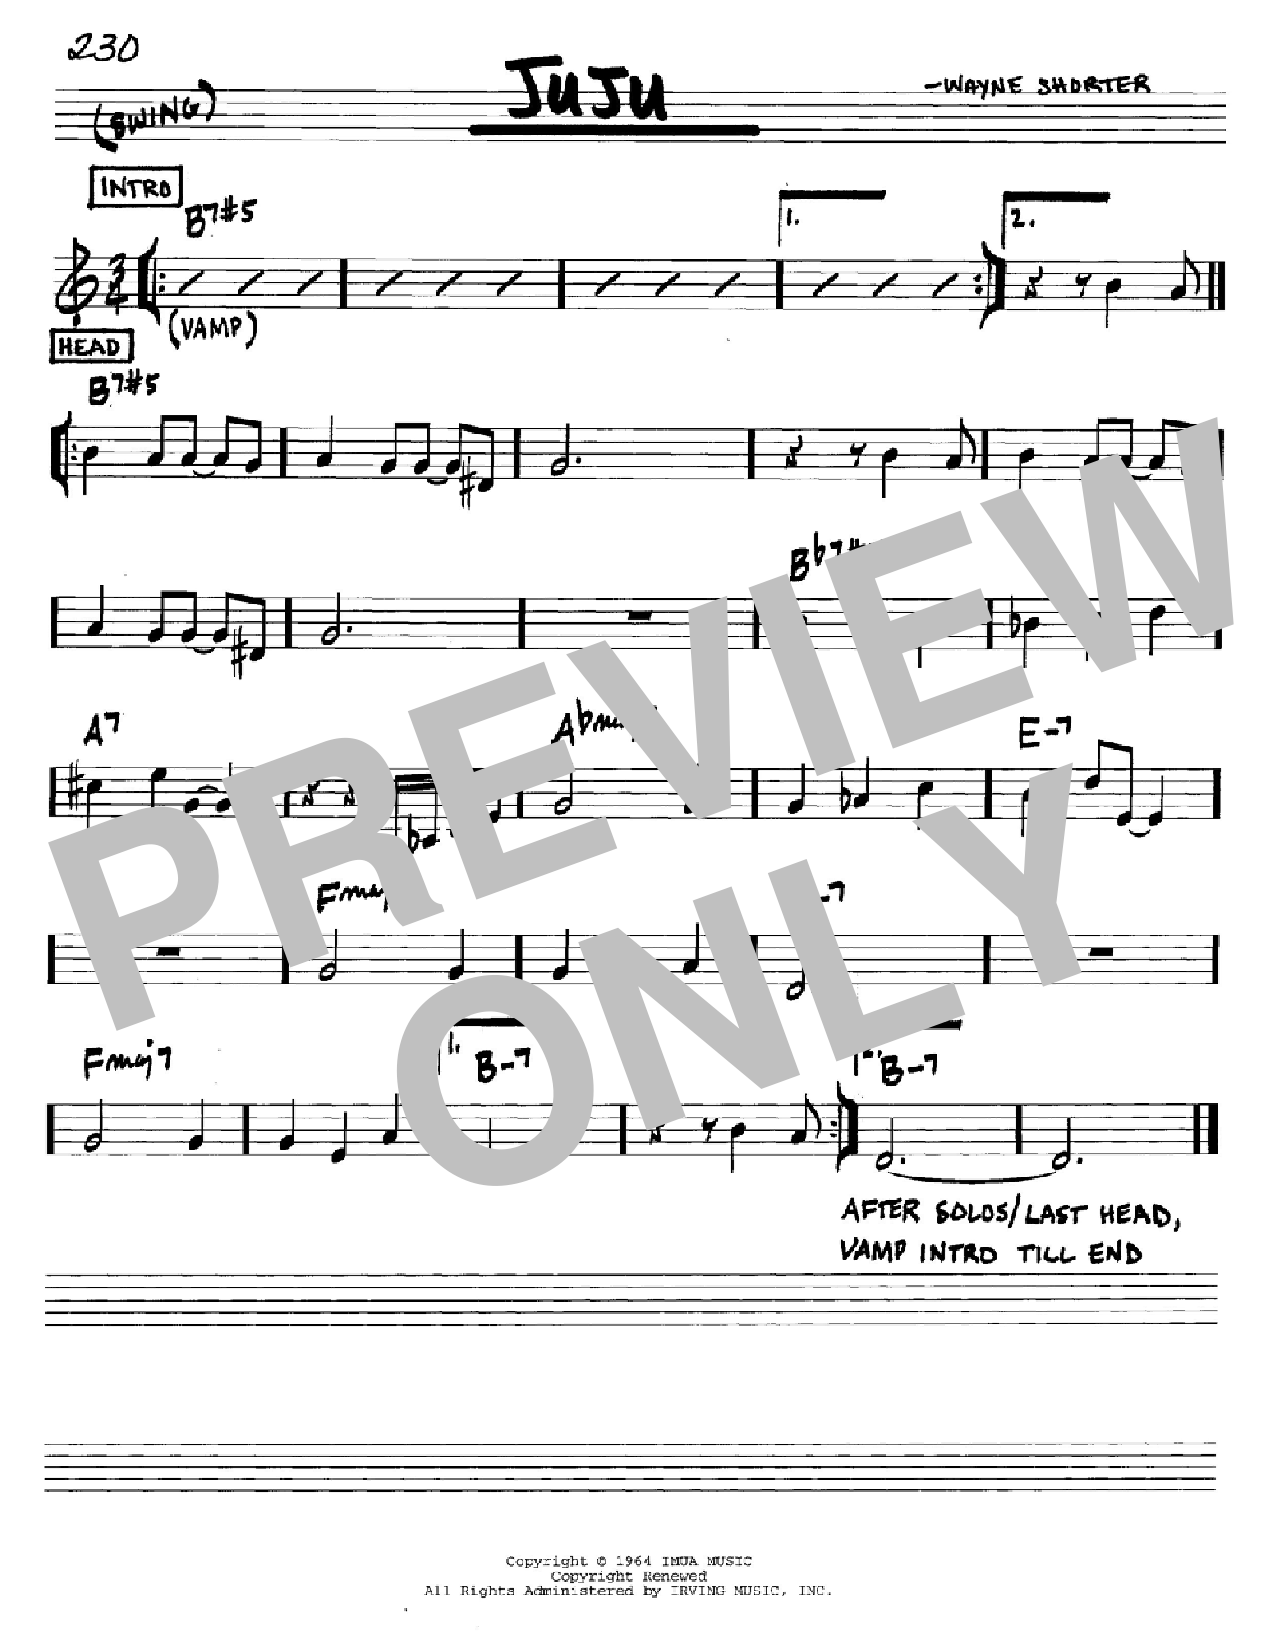 Wayne Shorter Juju Sheet Music Notes & Chords for Real Book - Melody & Chords - C Instruments - Download or Print PDF